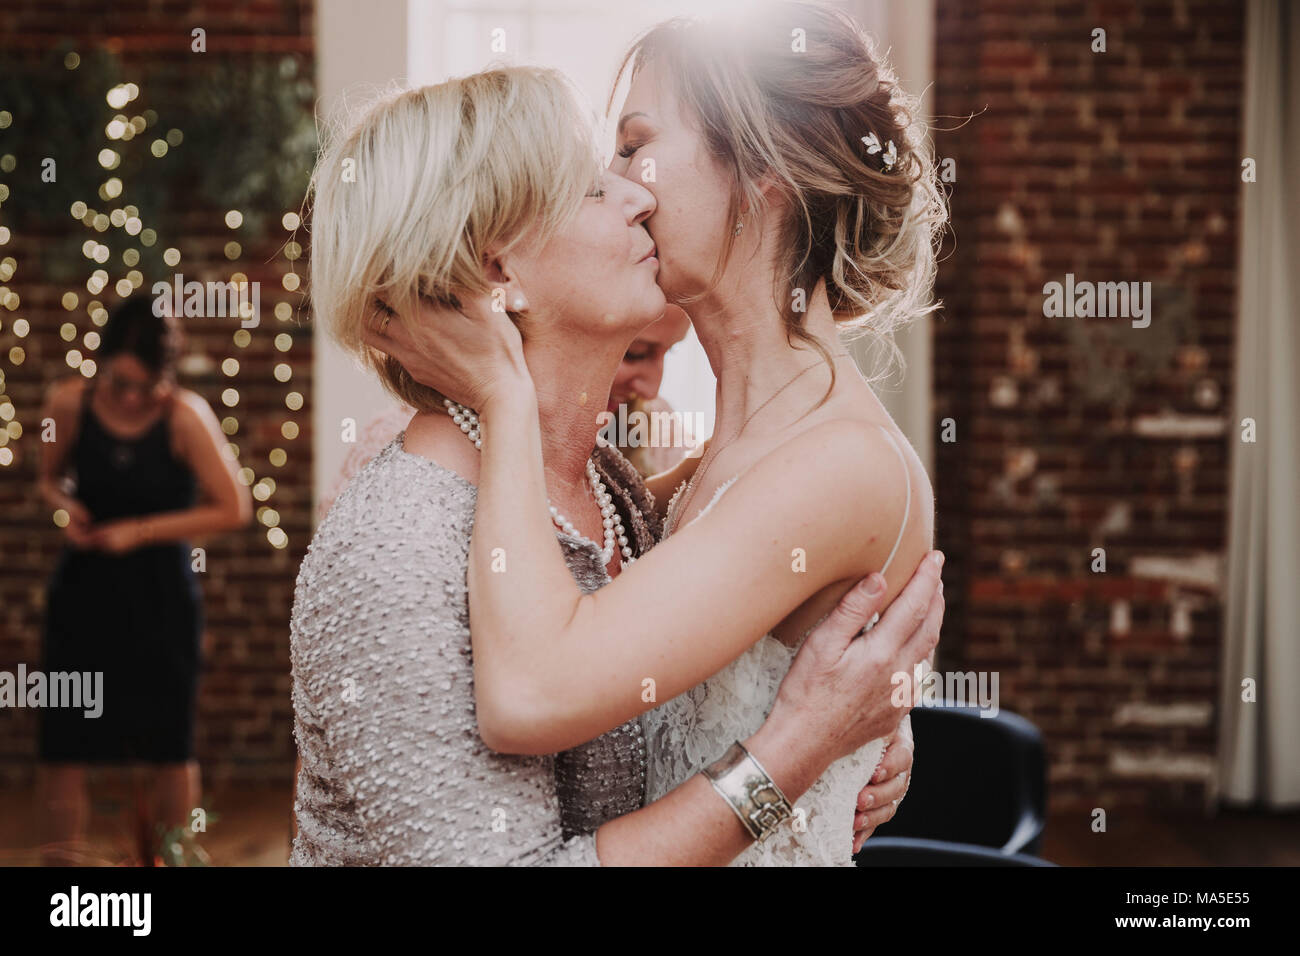 Wedding, bride, senior woman, hug, kiss, Stock Photo